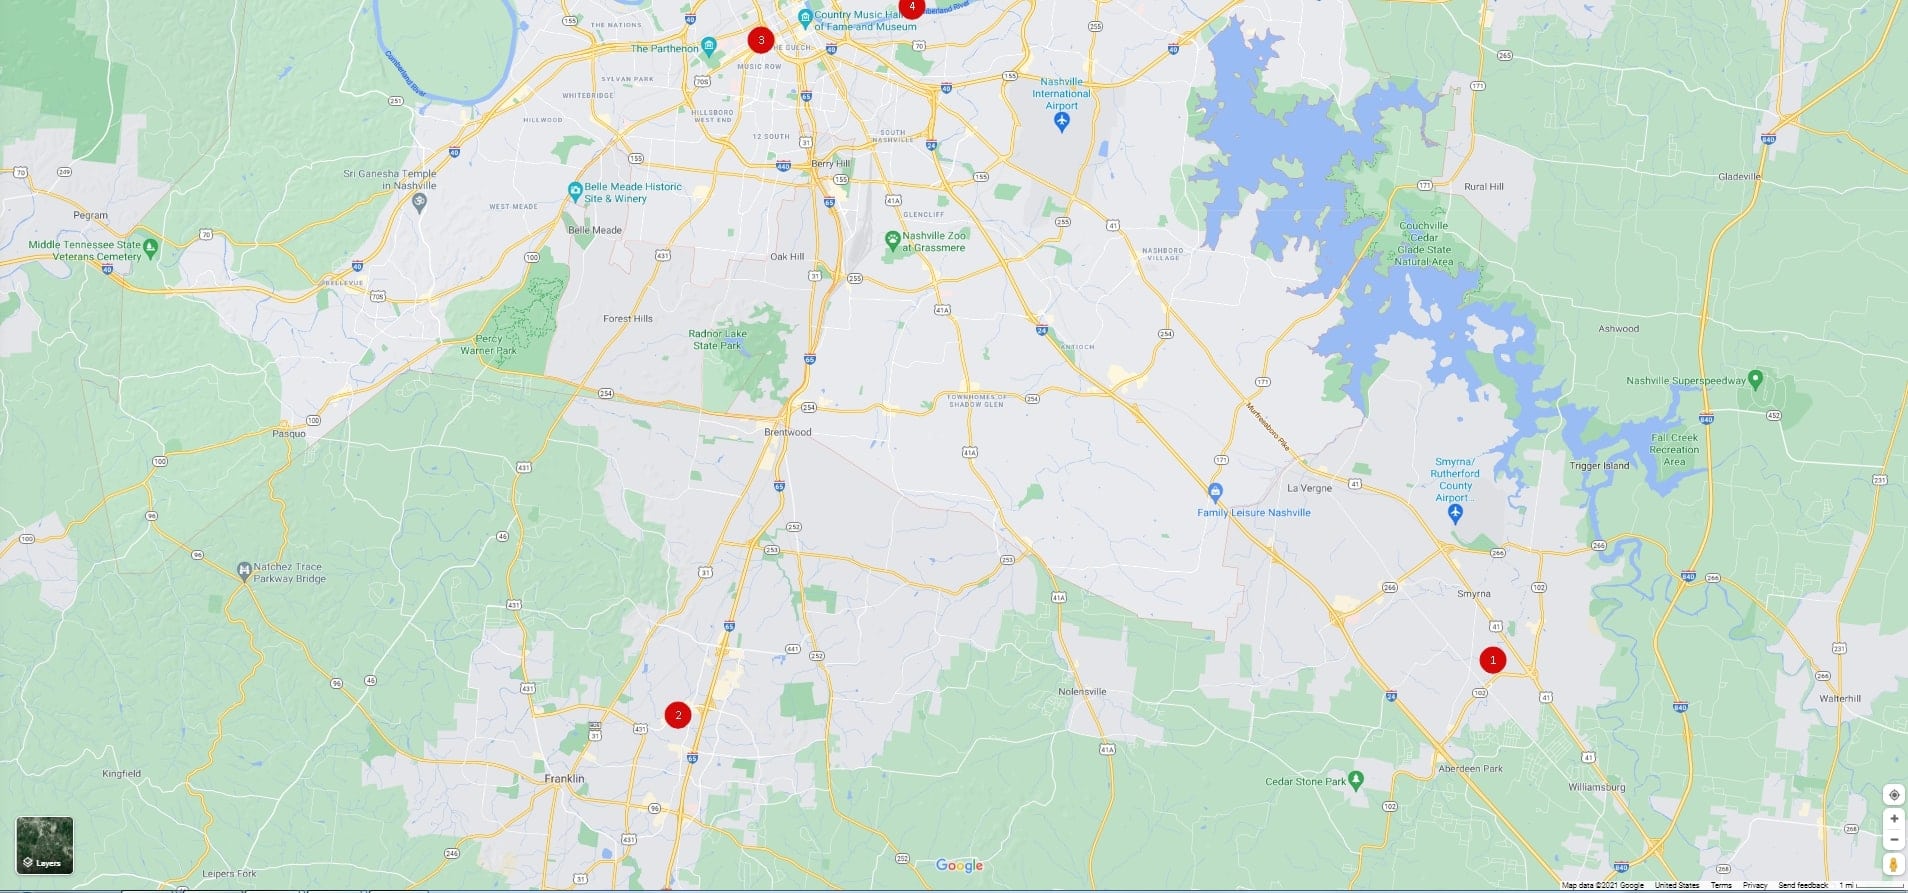 LabCorp & Wallgreens Map Points - Nashville